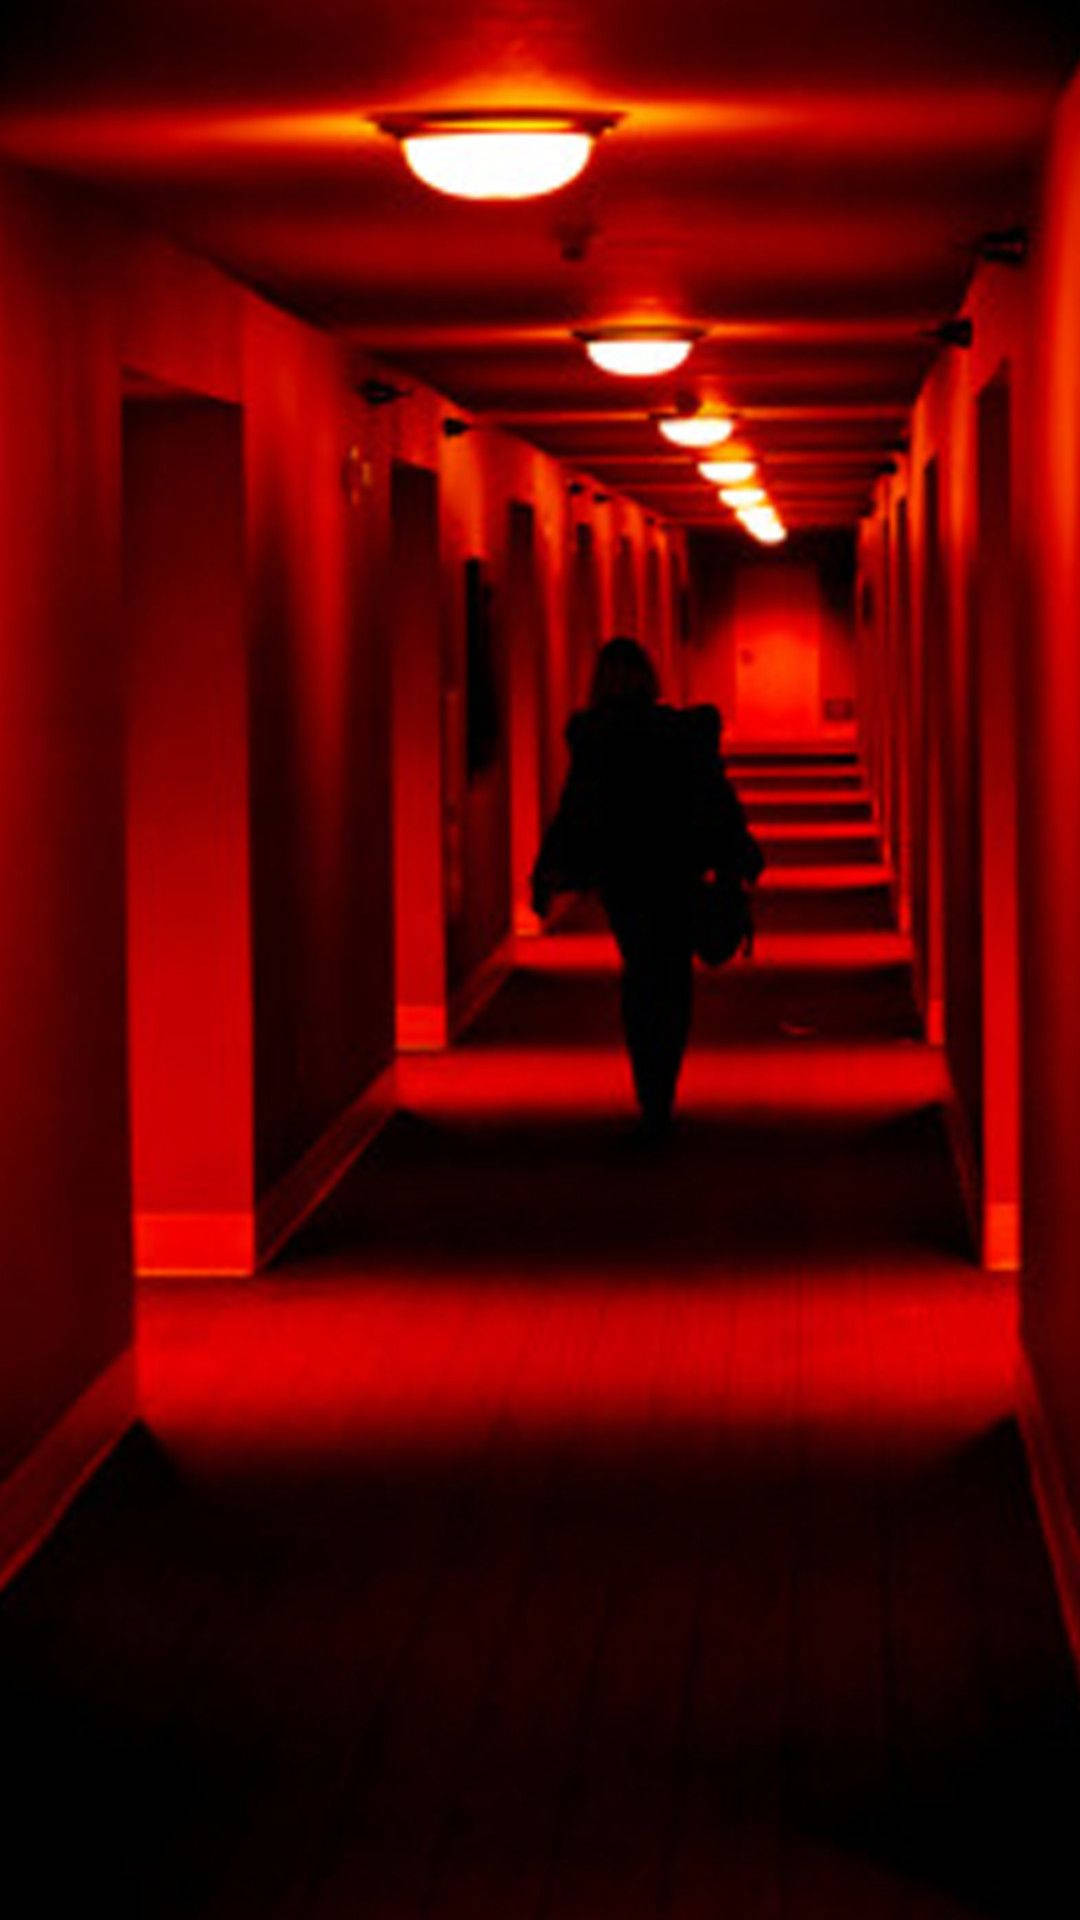 Red Aesthetic Ceiling Lights Wallpaper